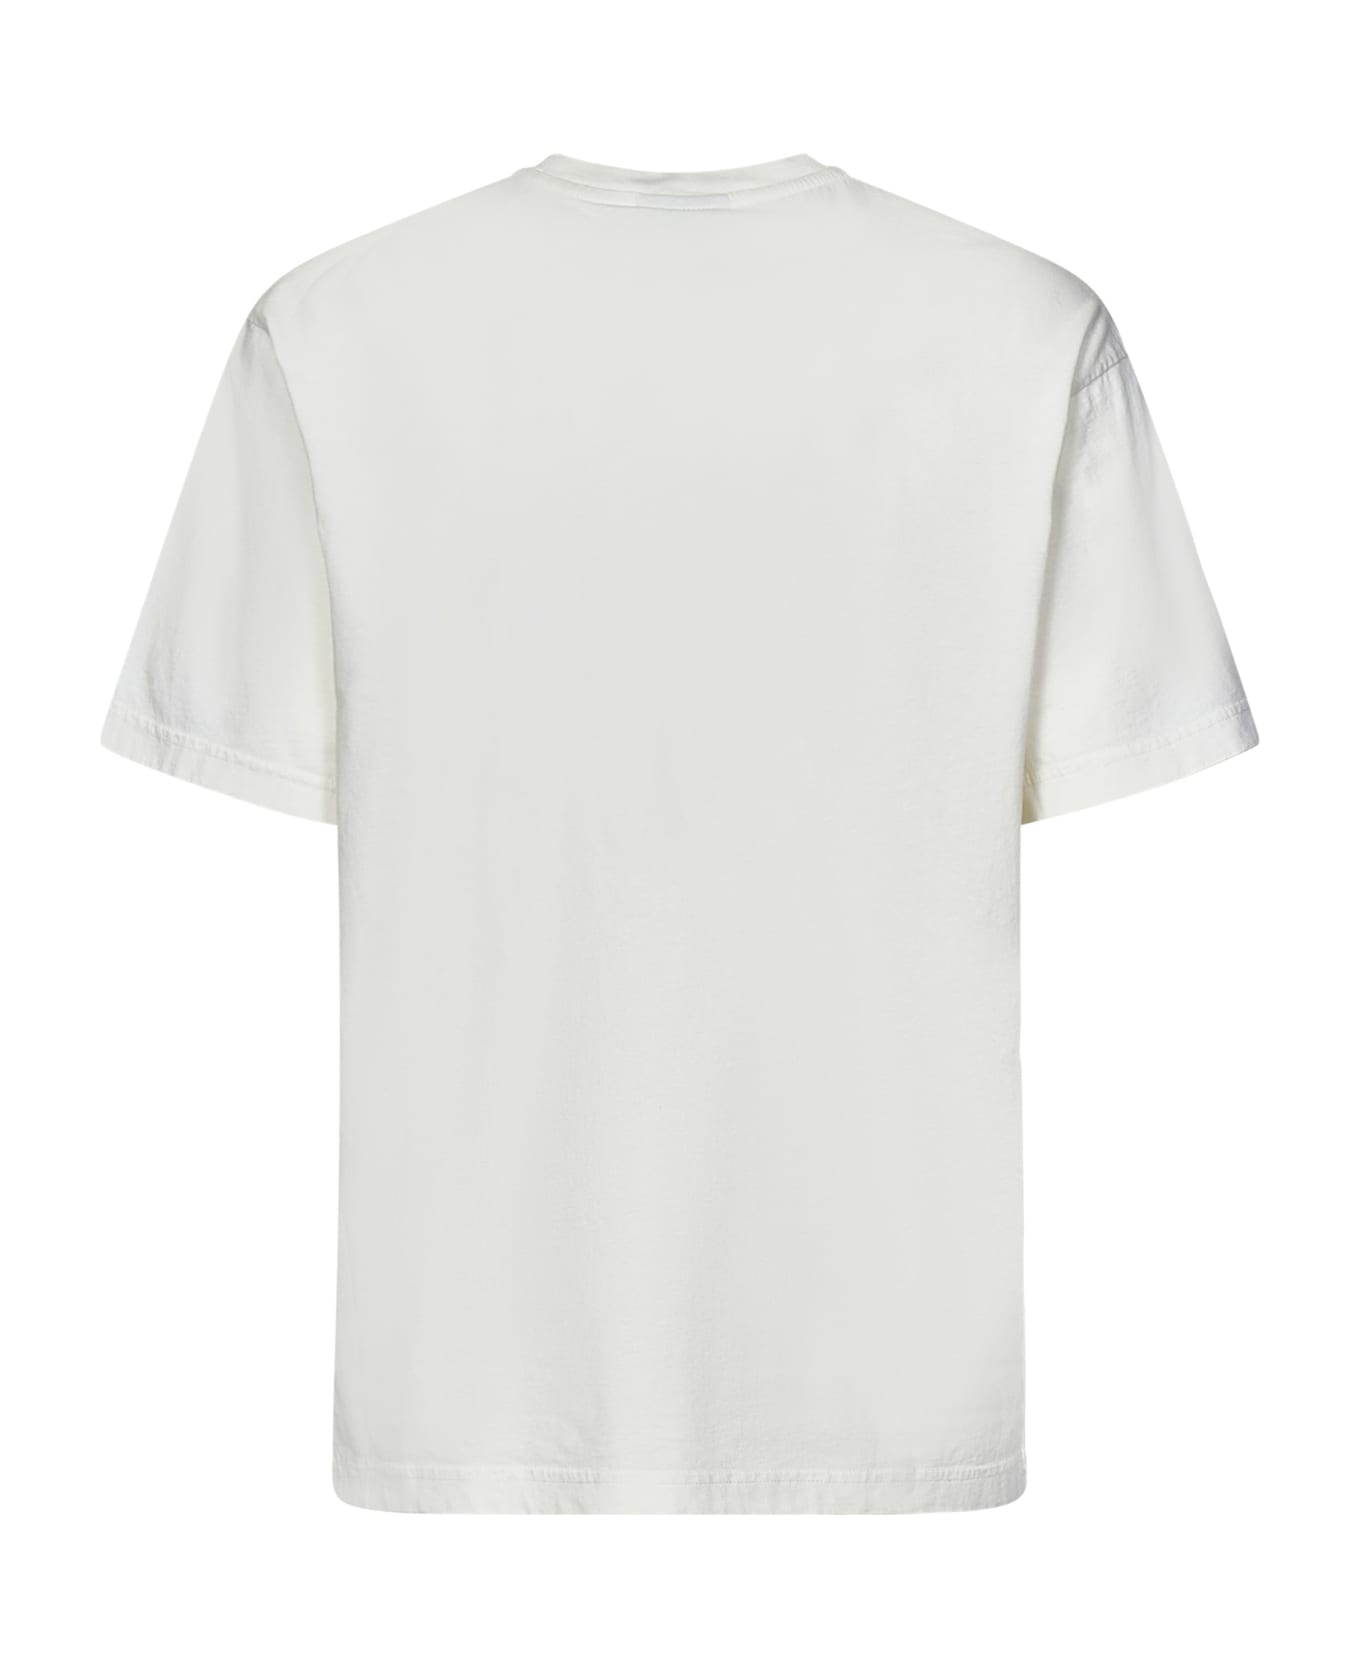 Bluemarble T-shirt - White シャツ